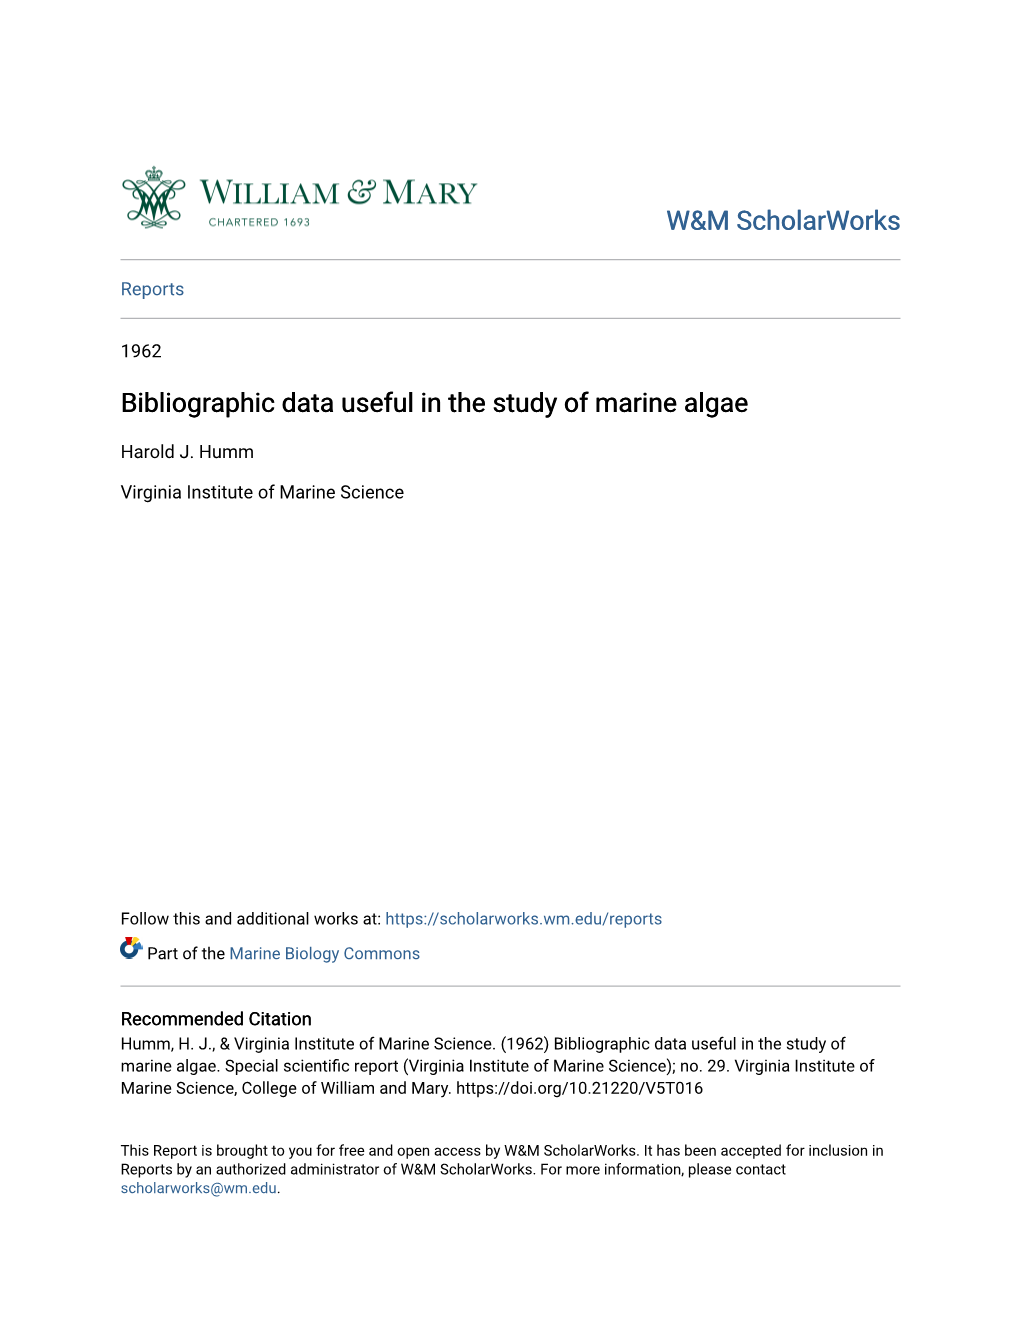 Bibliographic Data Useful in the Study of Marine Algae